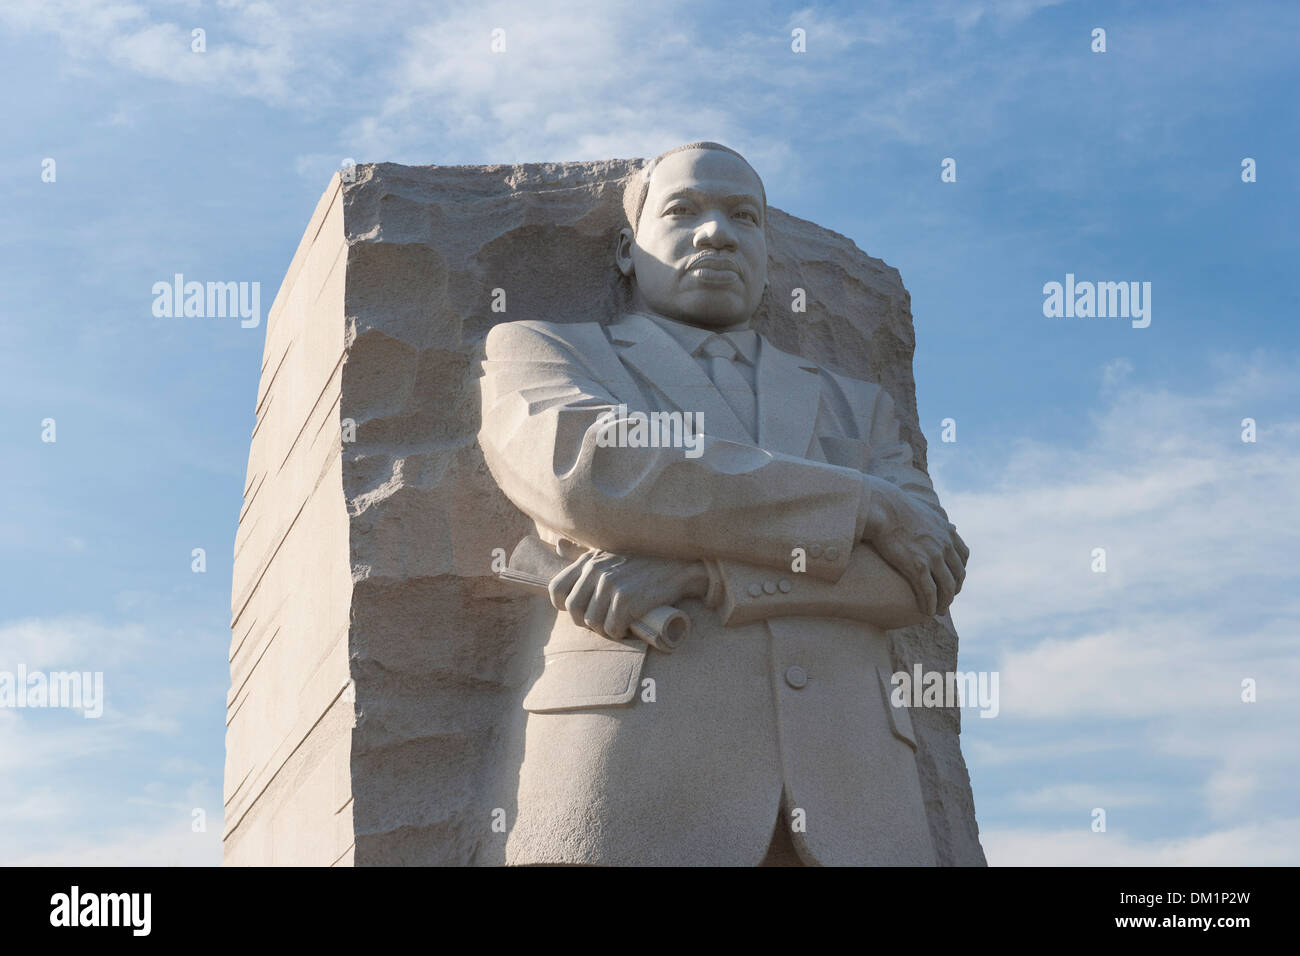 Marmorstatue von Martin Luther King Jr. in Washington, D.C. Stockfoto